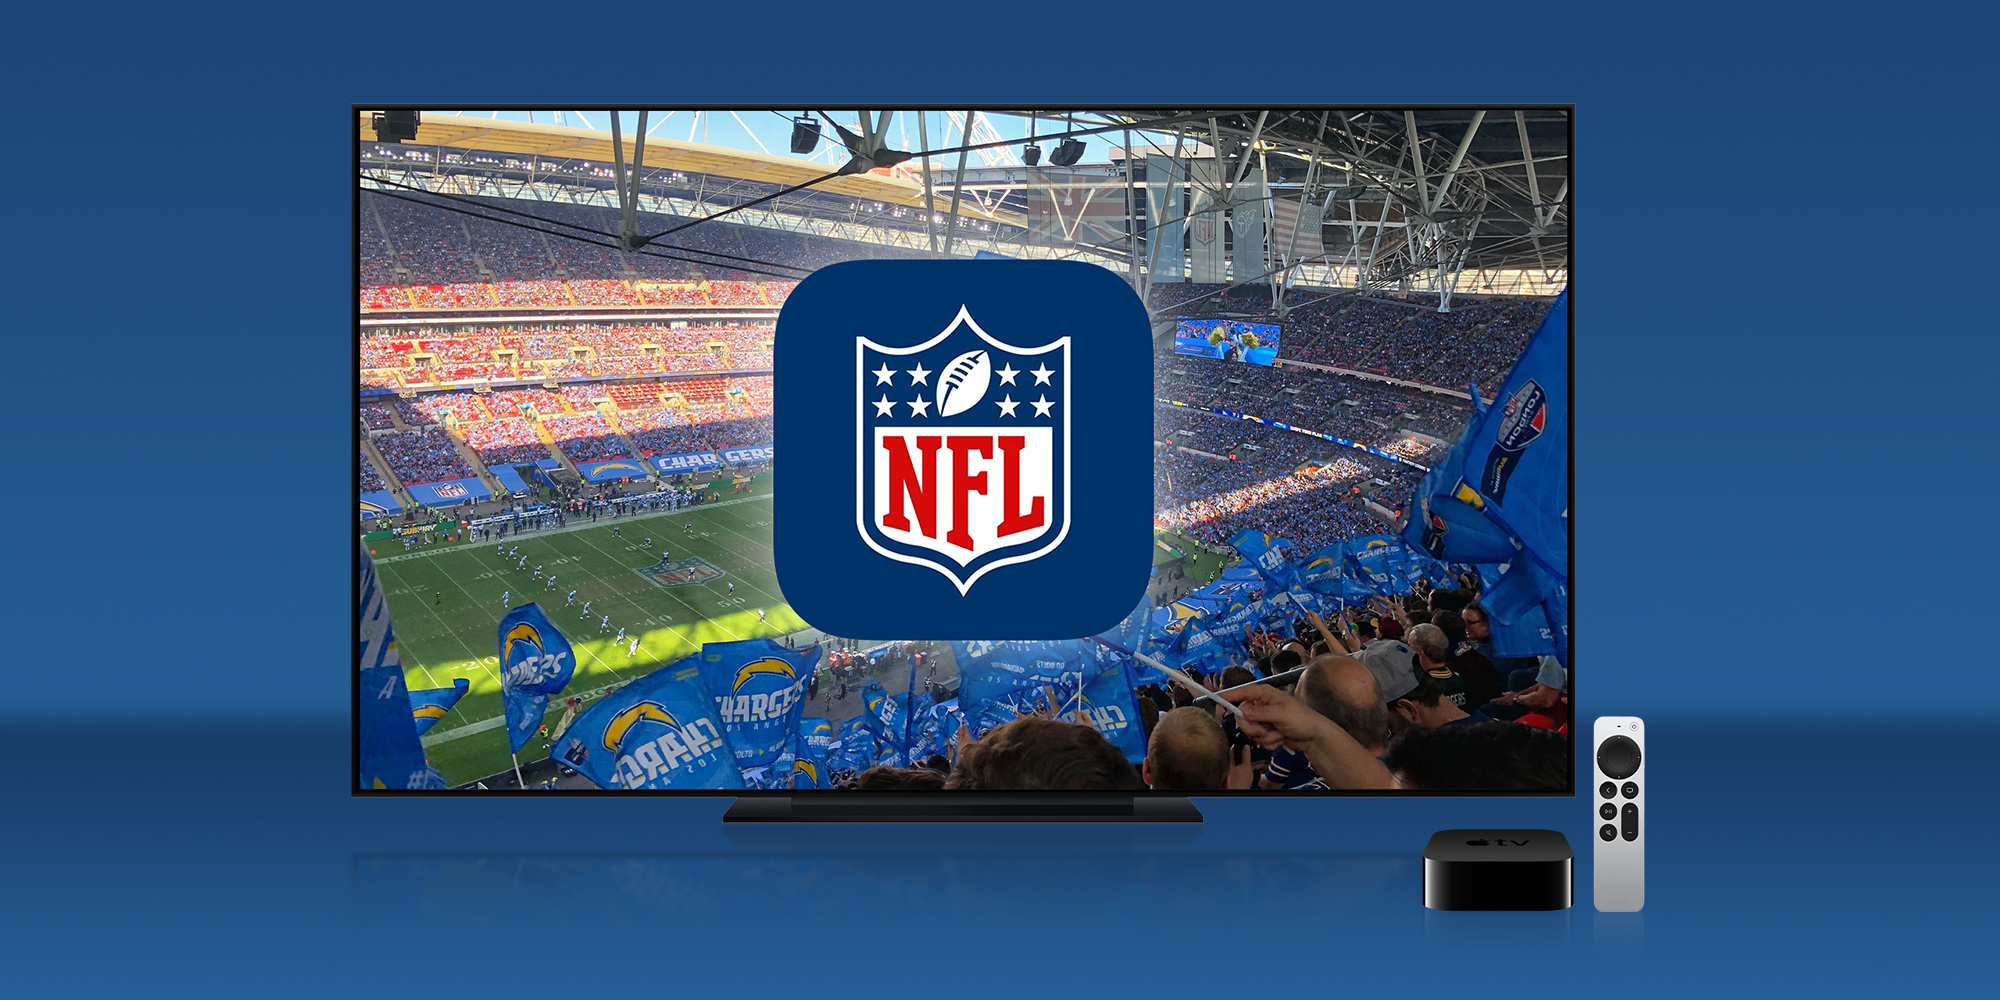 DirecTV's NFL Sunday Ticket Service Review on PlayStation 4